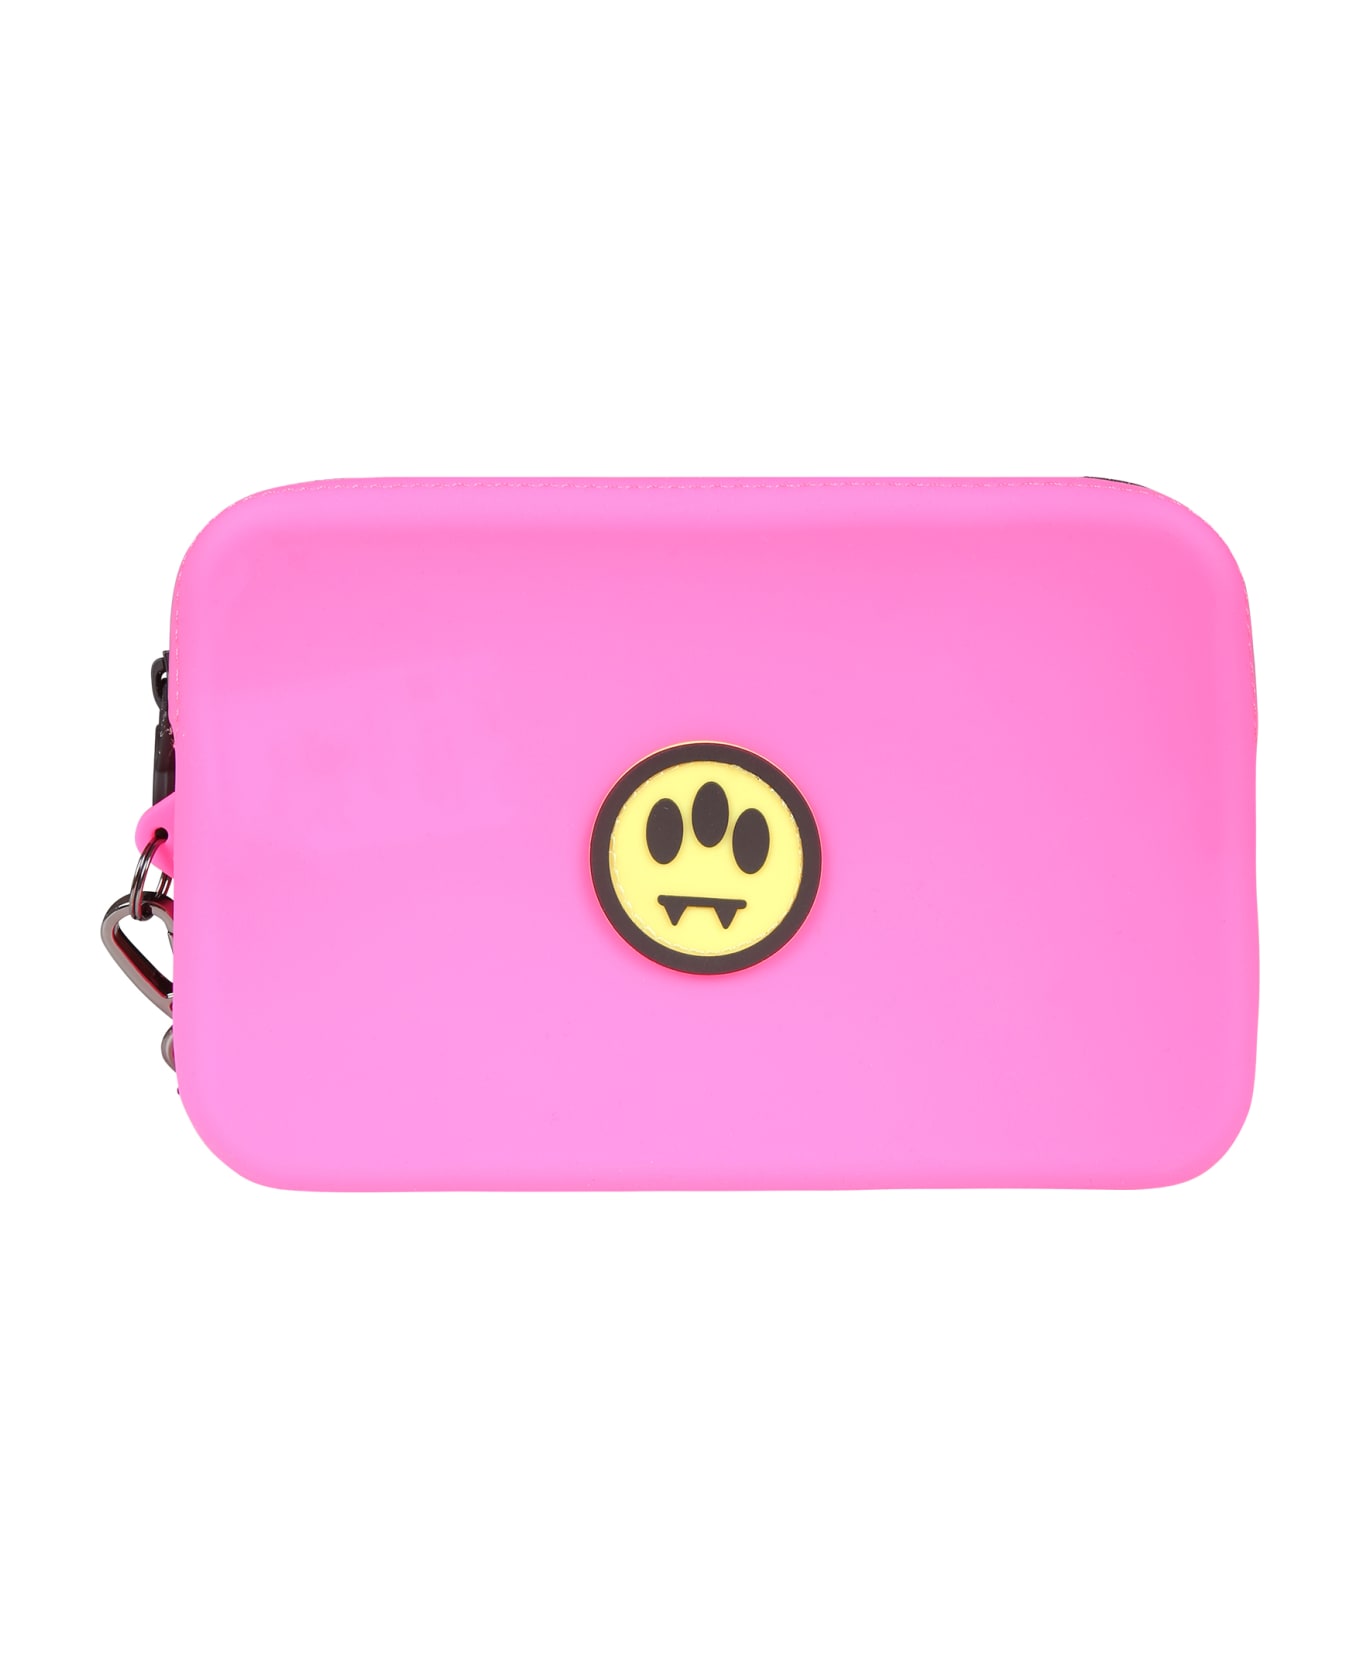 Barrow Fuchsia Clutch Bag For Girl With Smiley - Fuchsia アクセサリー＆ギフト